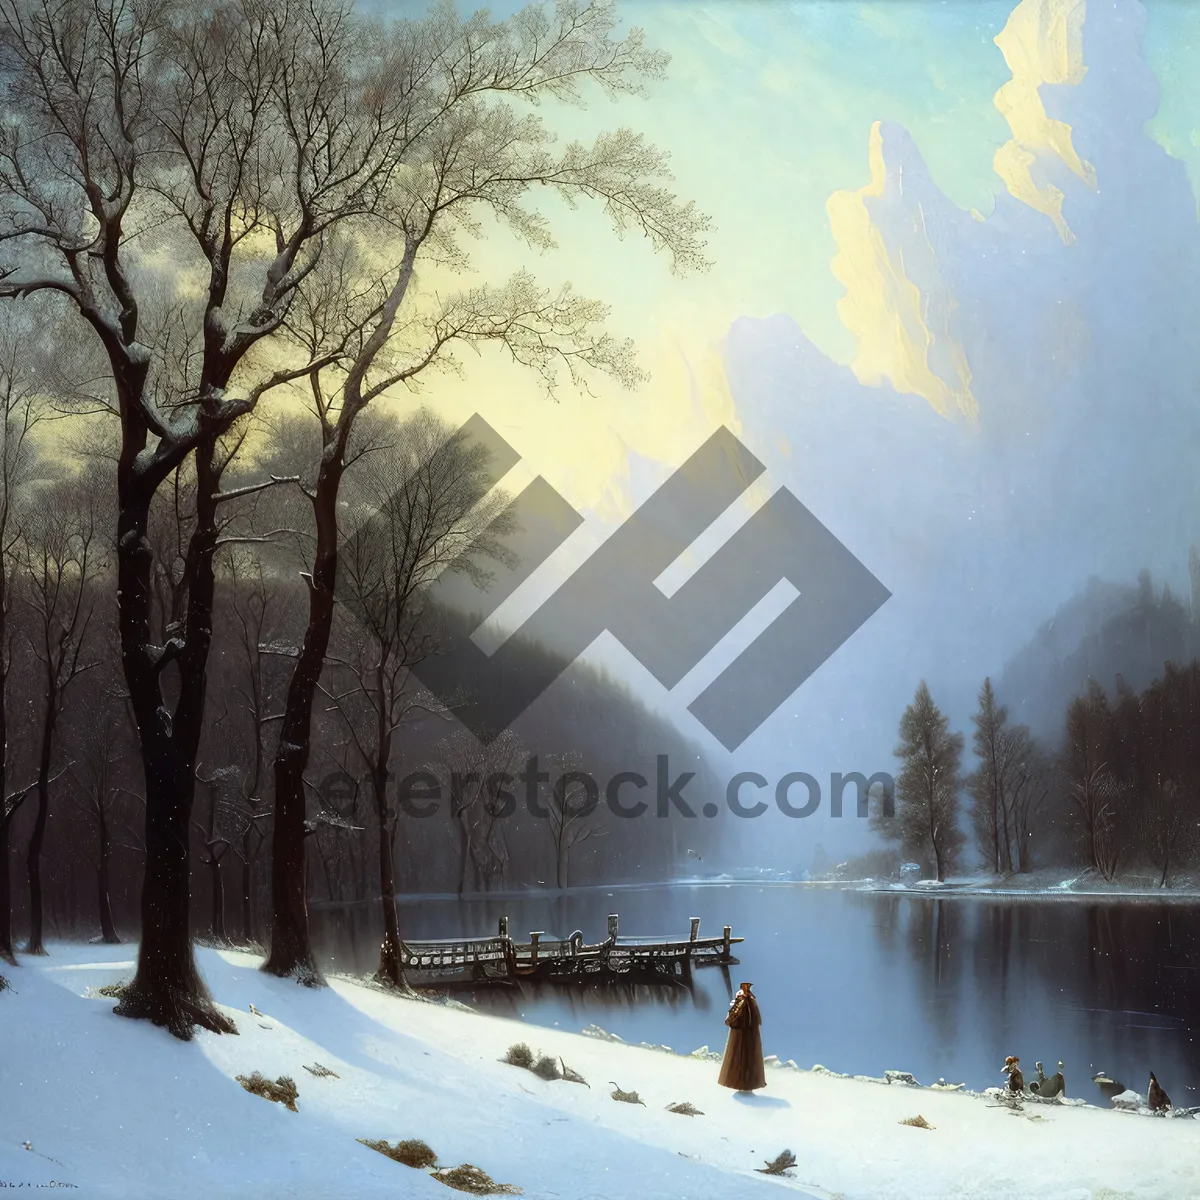 Picture of Winter Wonderland - Snowy Forest Landscape